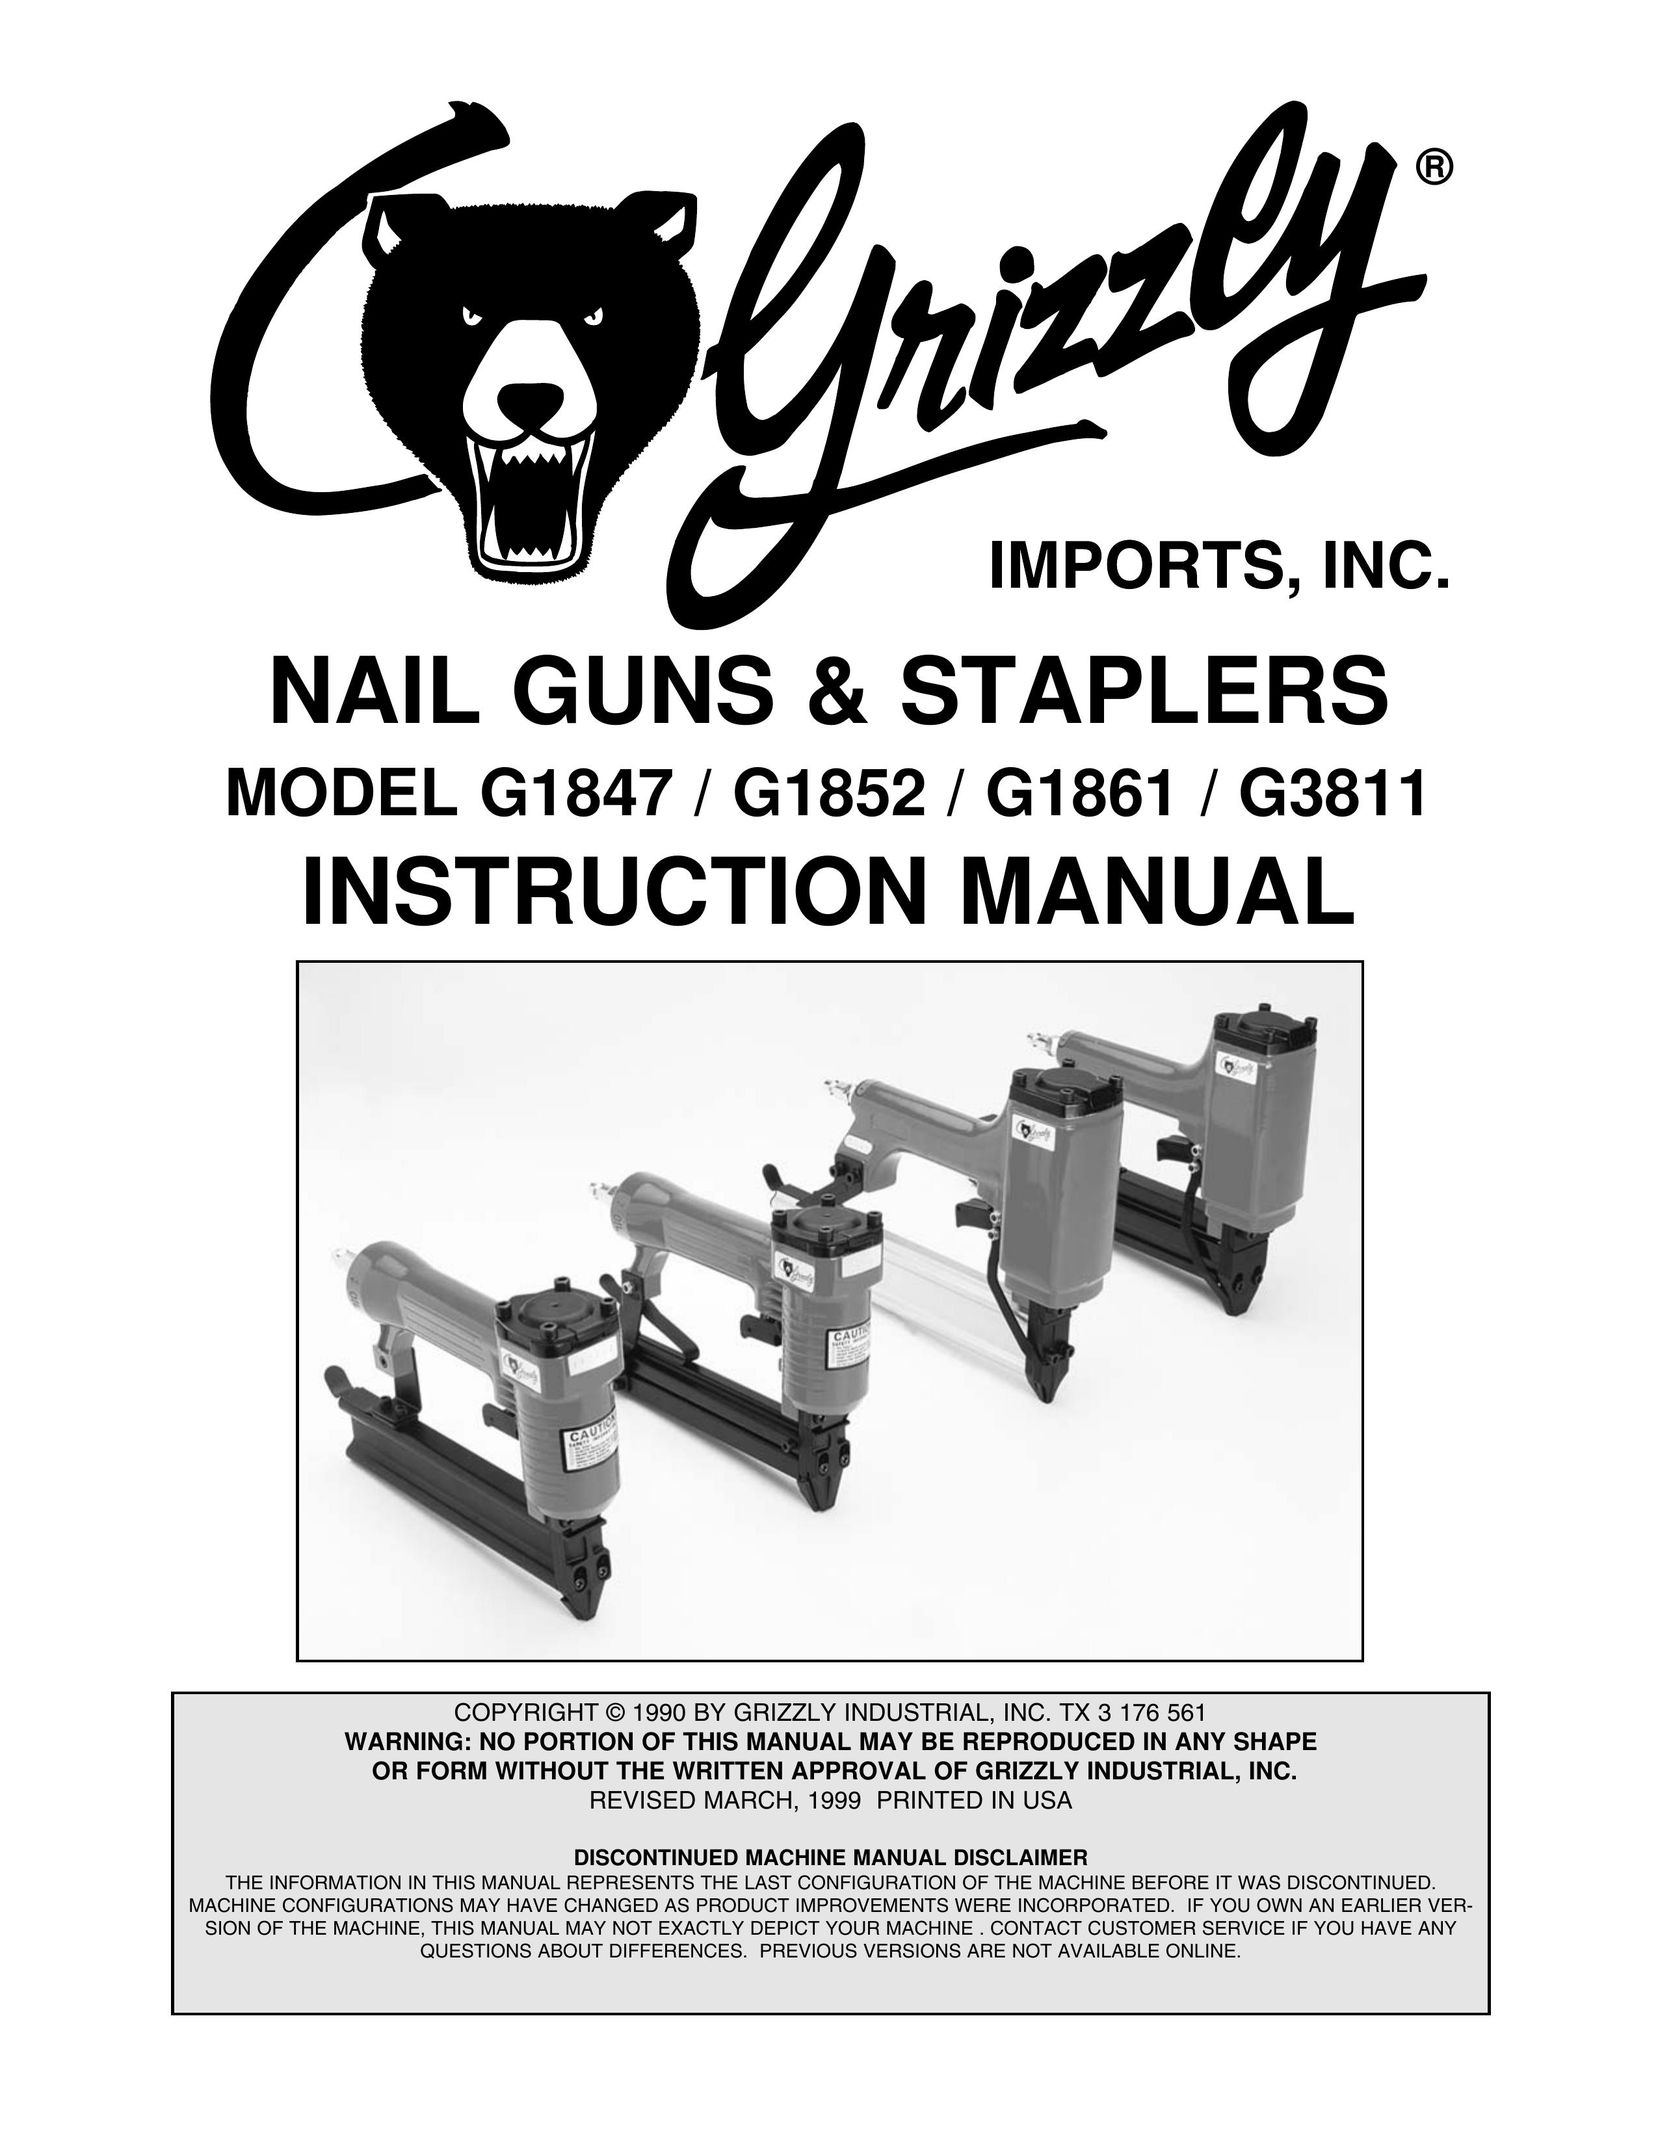 Grizzly G3811 Nail Gun User Manual